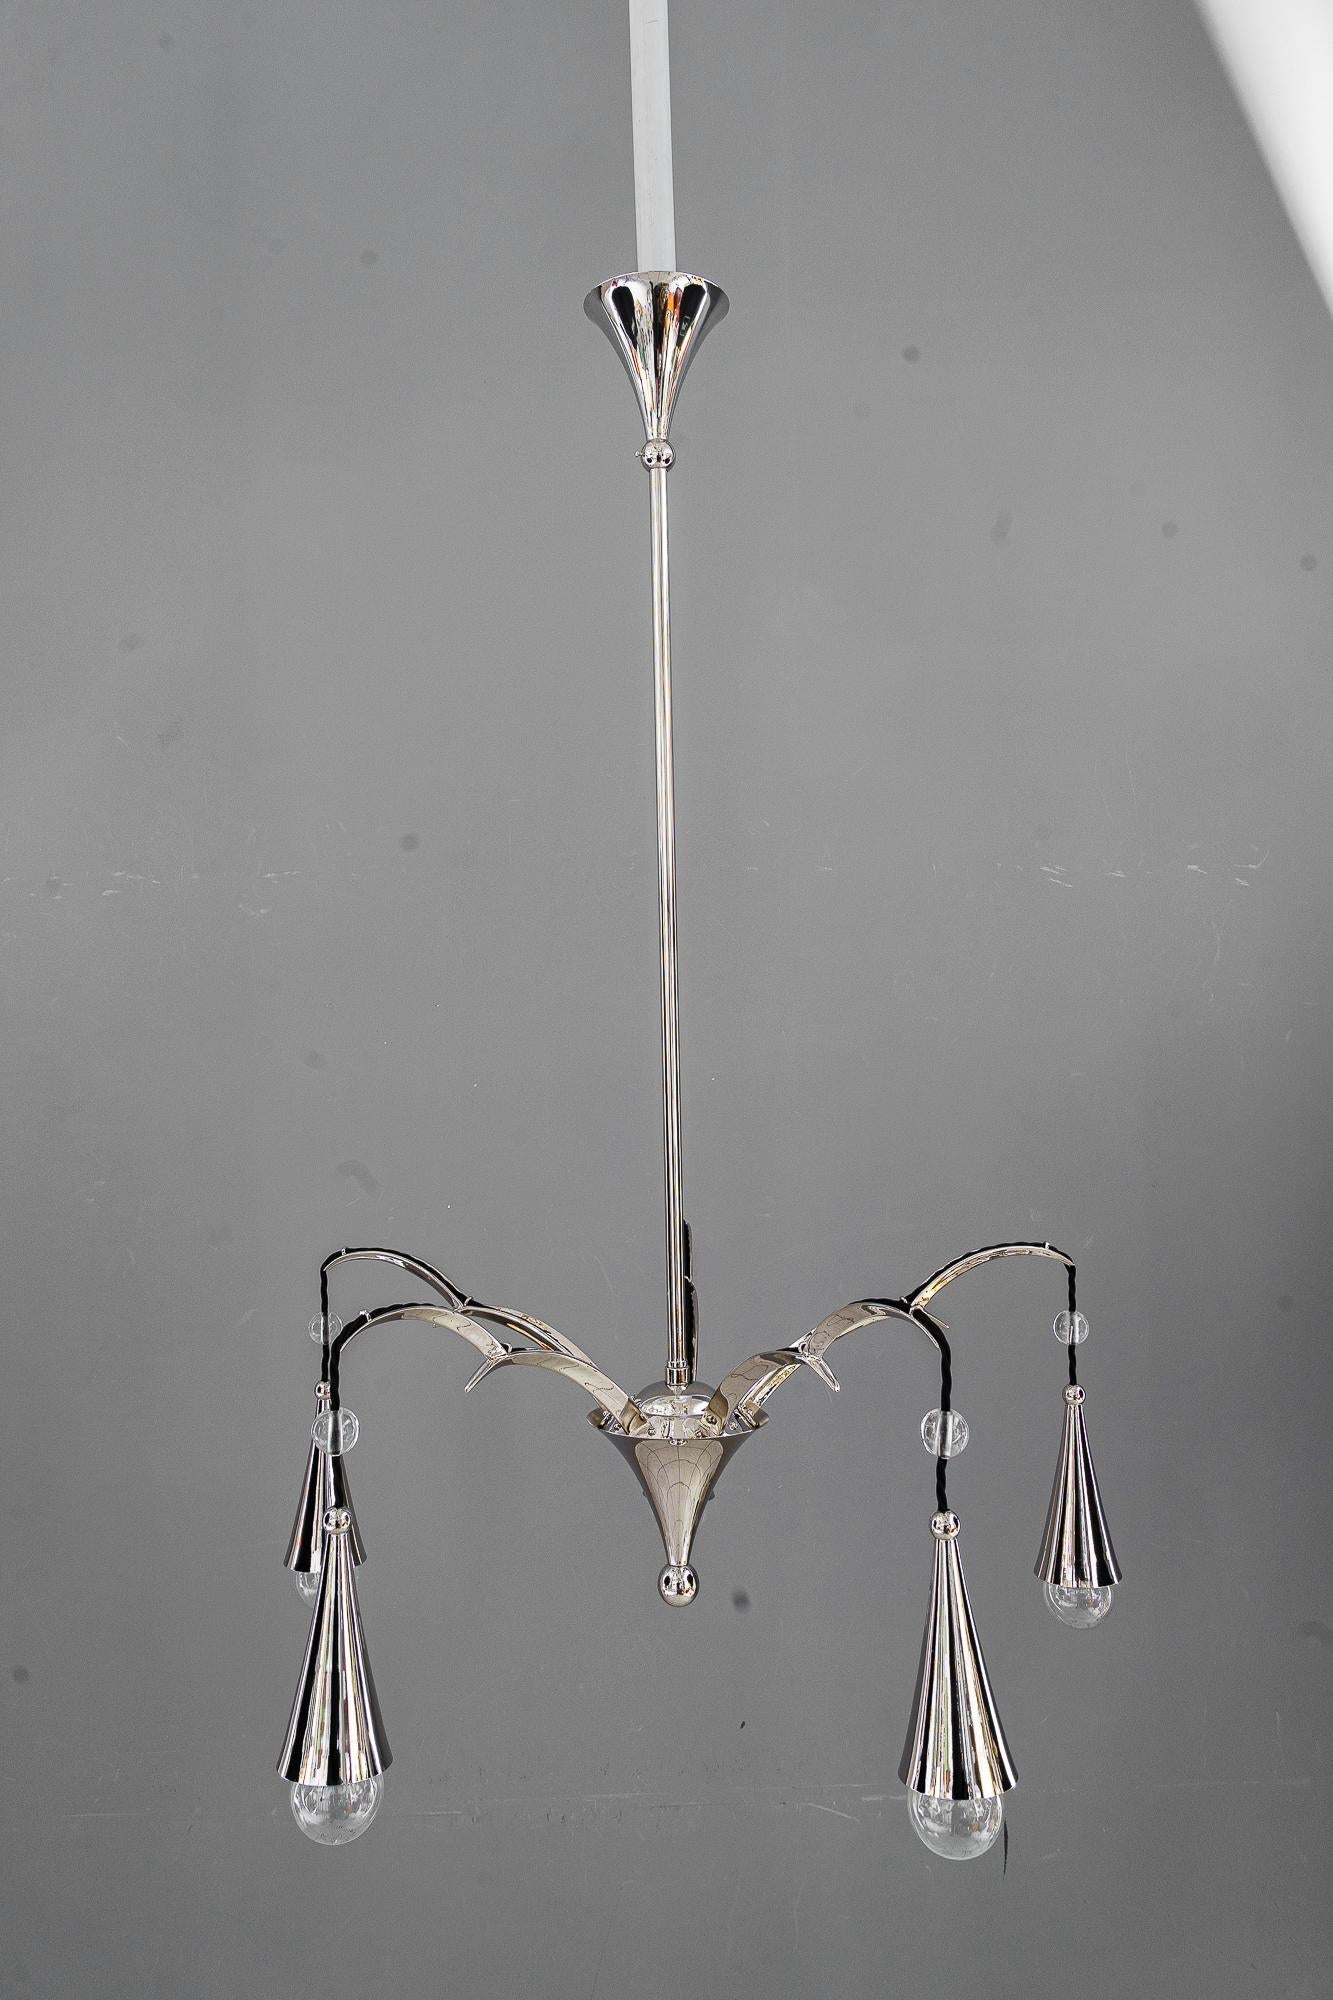 Nickel - Plated art deco chandelier vienna around 1920s
Brass, nickel-plated
With glass balls on the wire